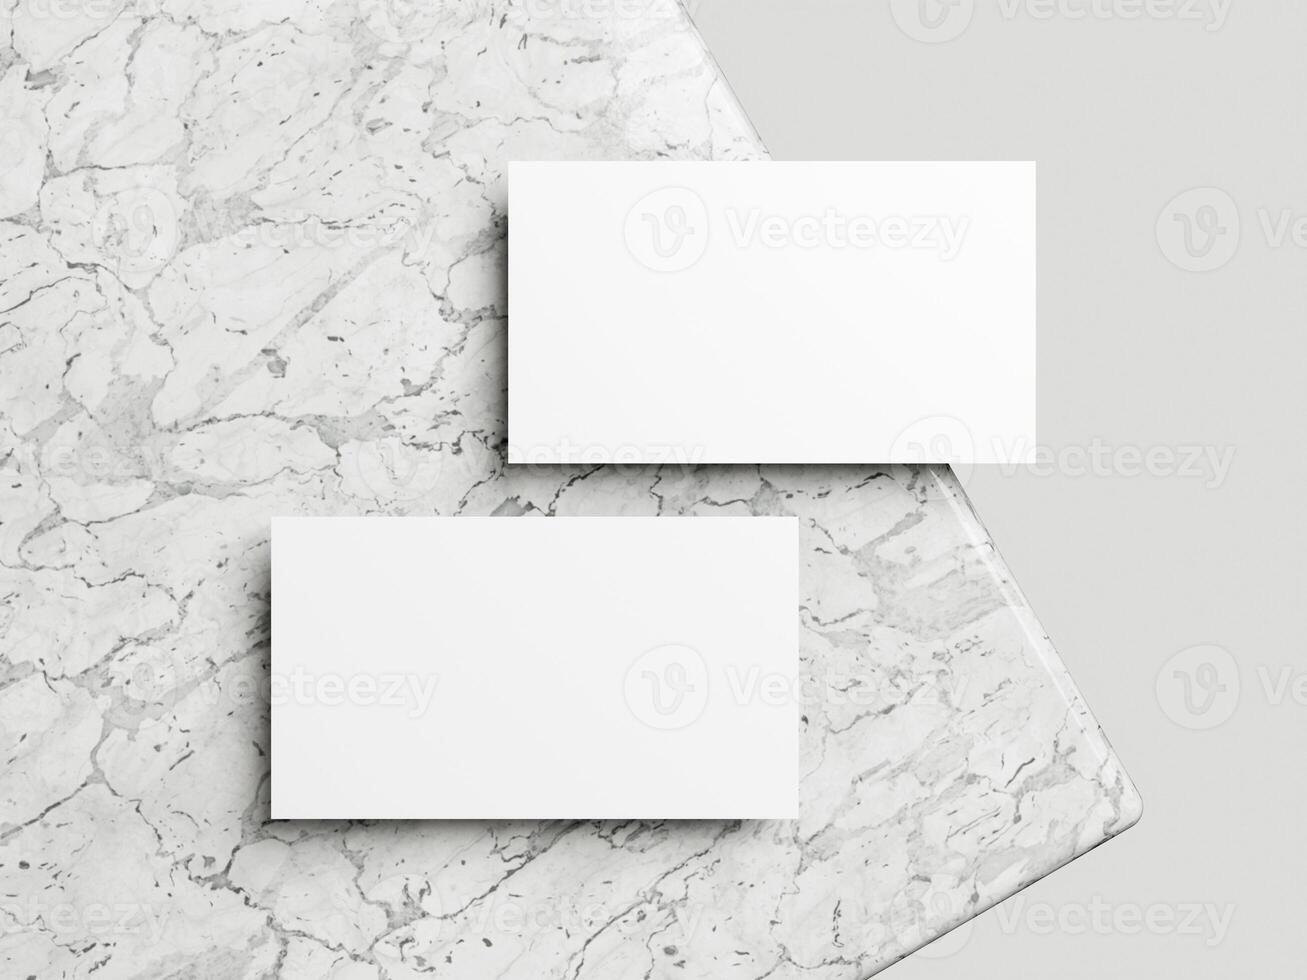 Blank white business card mockup on marble background 3d render illustration for mock up and design presentation. photo